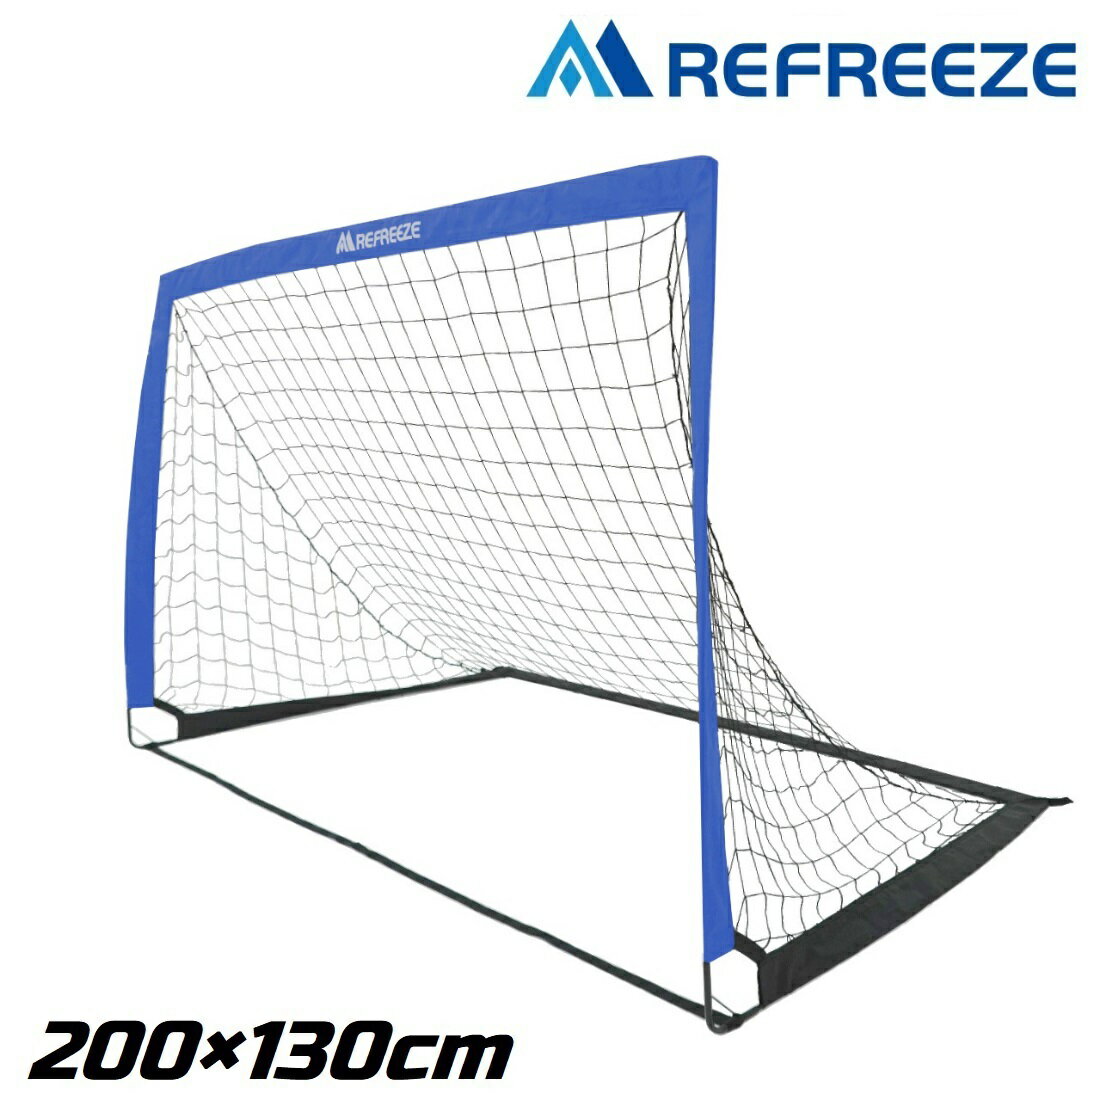 REFREEZE(リフリーズ) 200×130cm 折りたたみ サッカーゴール ブルー 1個 収納バッグ付き ポータブル フットサルゴール